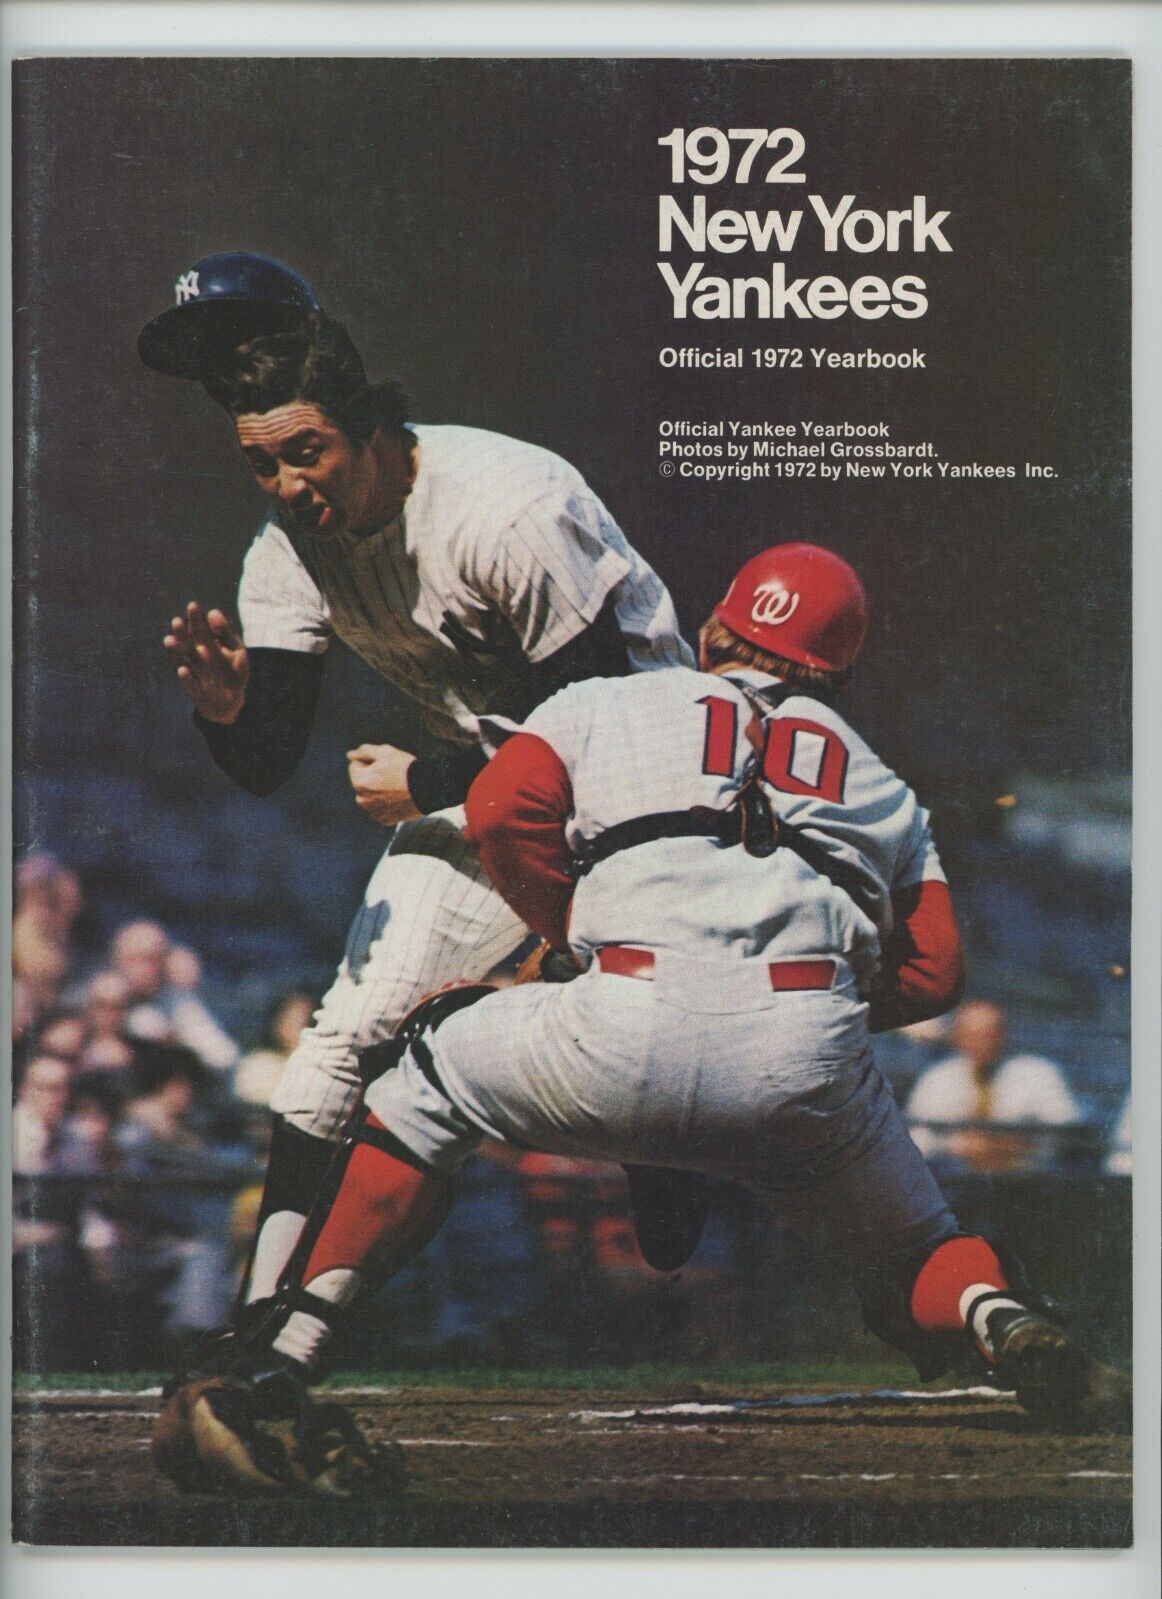 1972 New York Yankees Official Yearbook - Thurman Munson Photo Poster paintings MLB Baseball